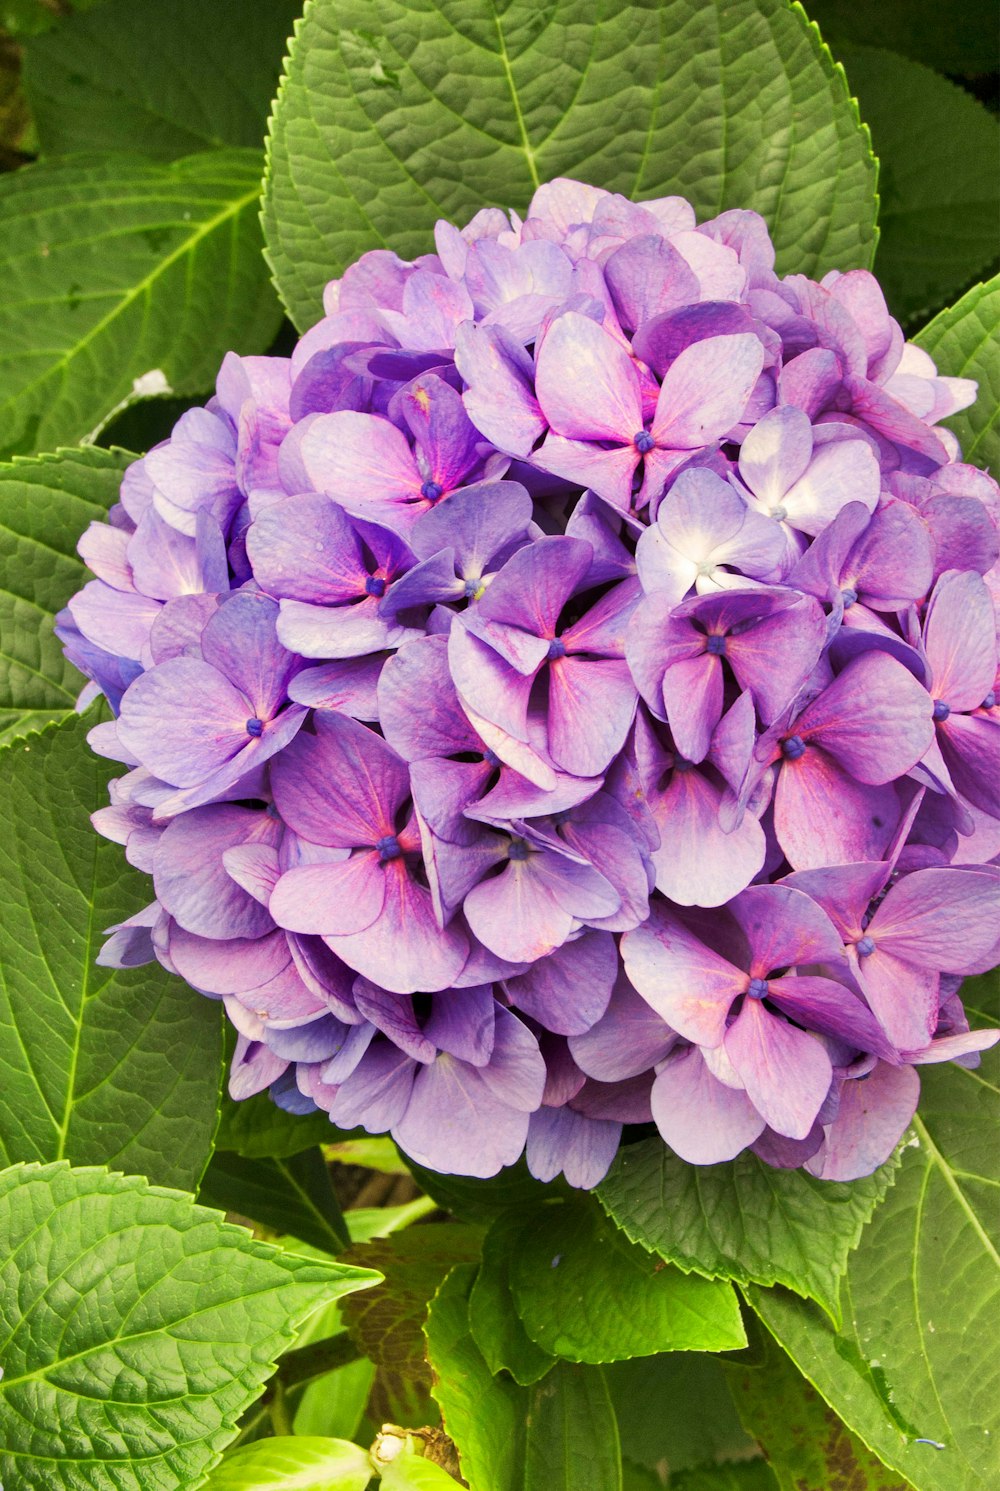 Purple hydrangeas flower in closeup photo photo – Free Flower ...